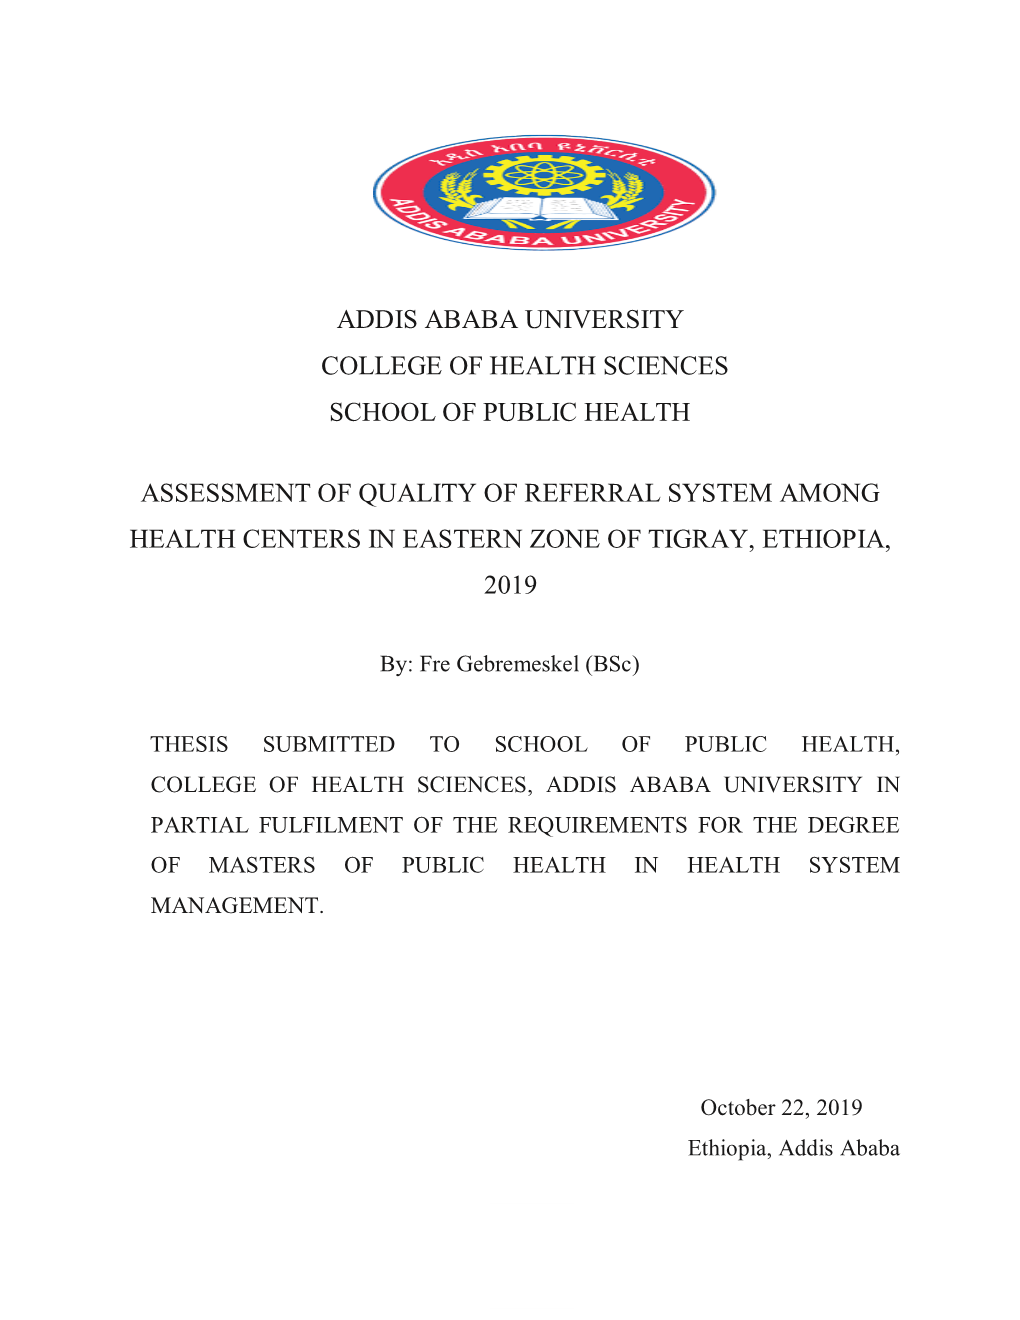 Addis Ababa University College of Health Sciences